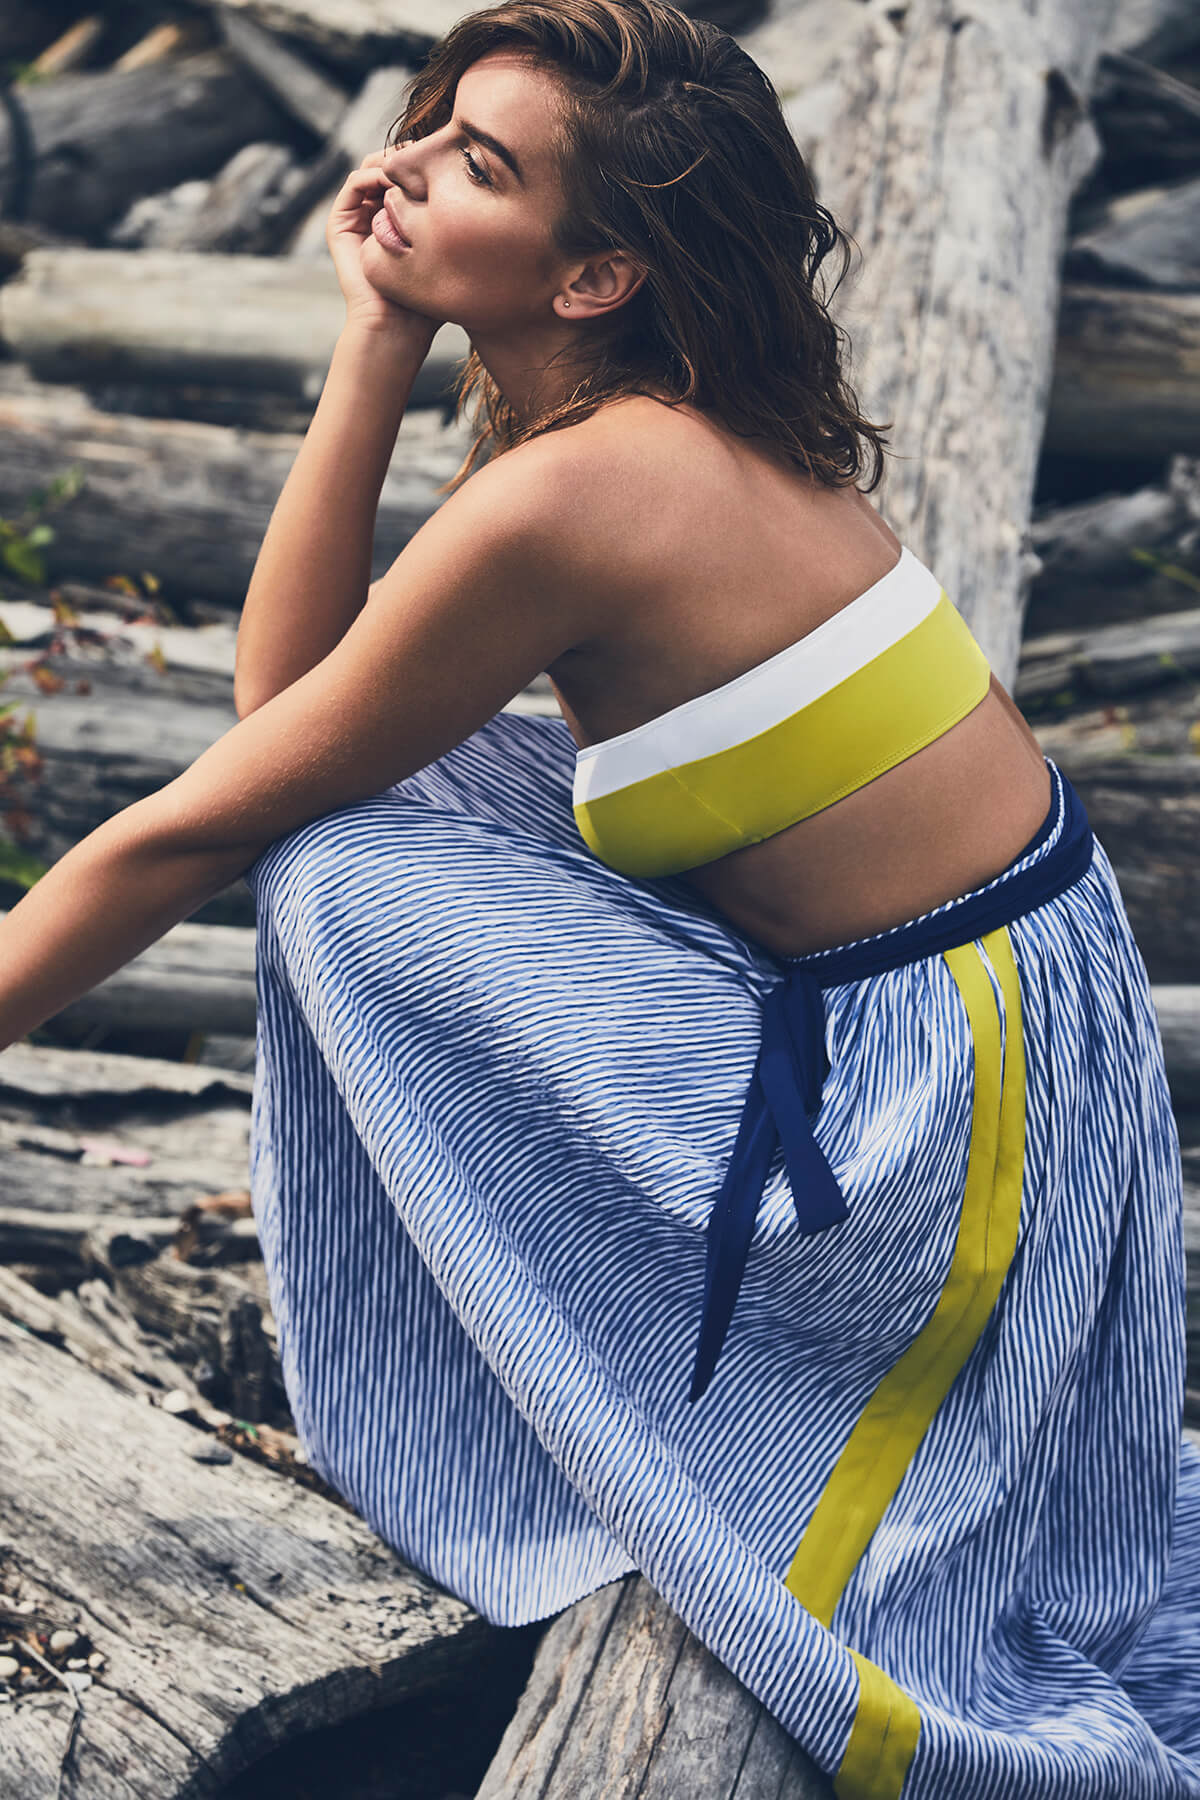 Model poses in yellow bandana bikini top and blue striped full length skirt